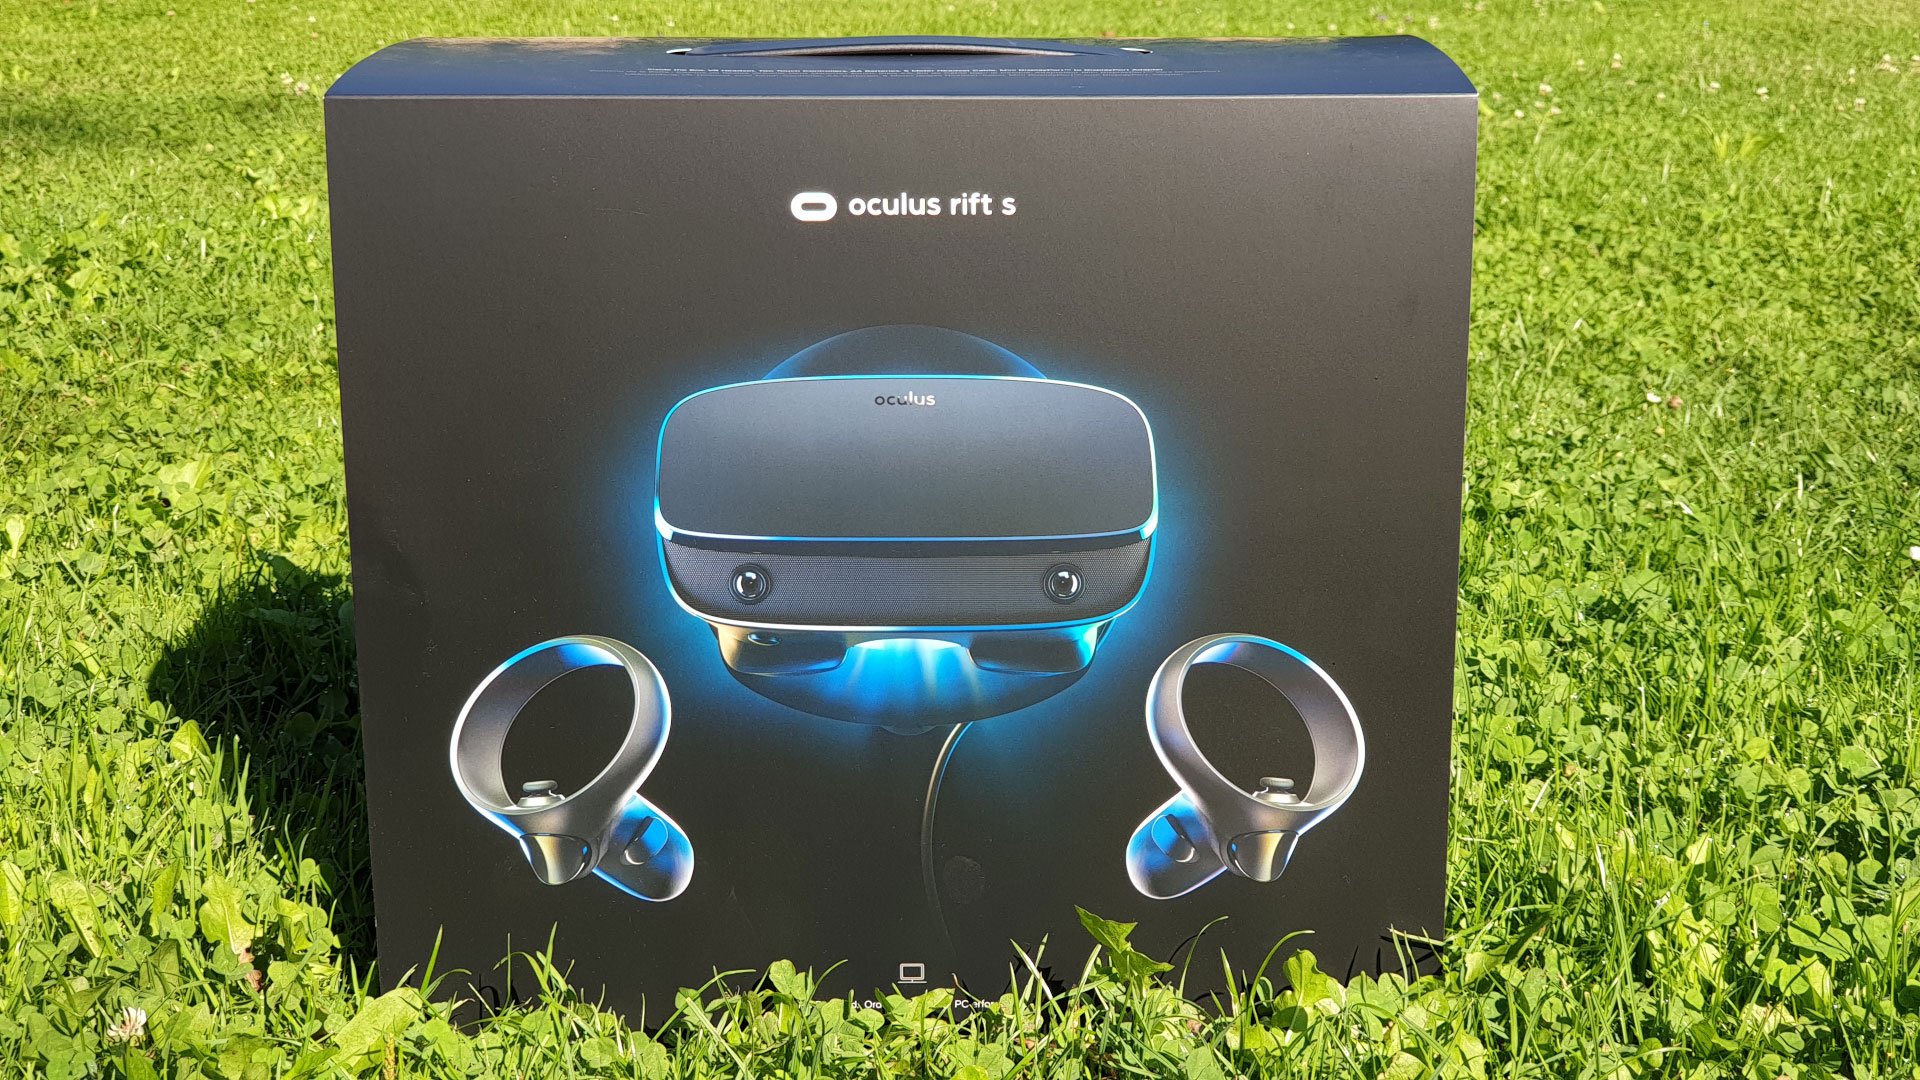 Oculus Rift S package